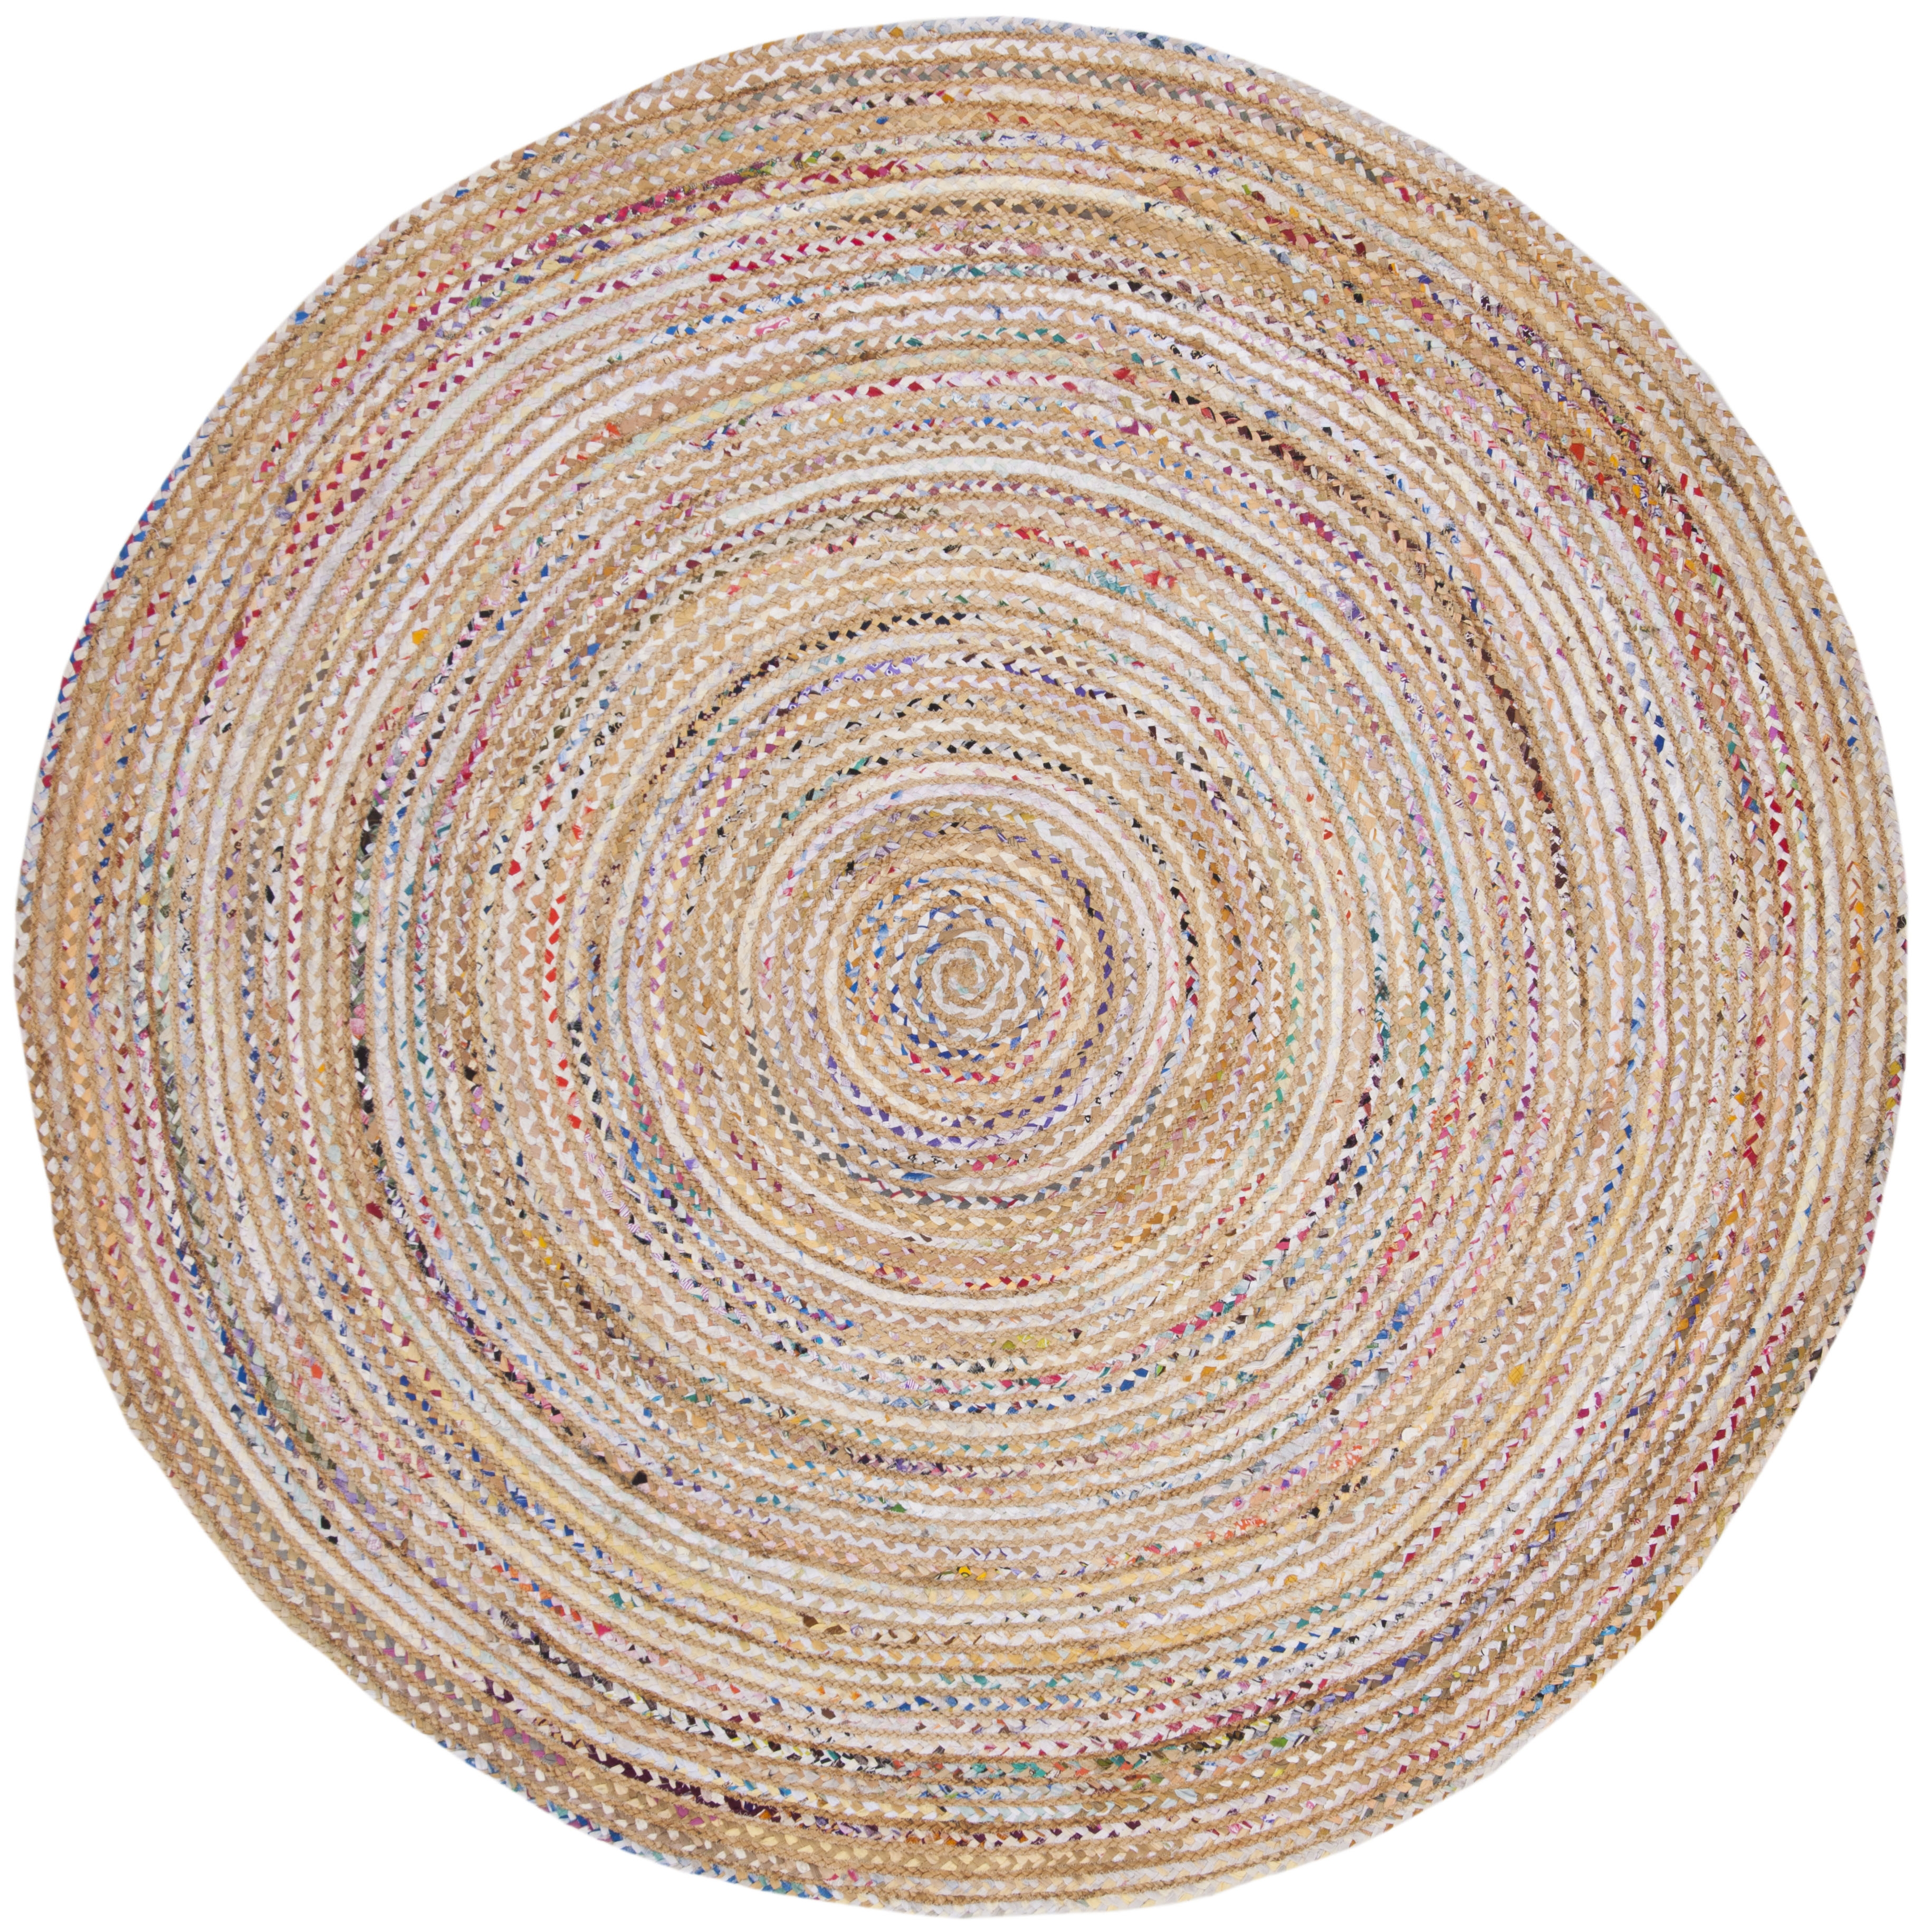 Arlo Home Hand Woven Area Rug, CAP202B, Beige/Multi,  7' X 7' Round - Image 0